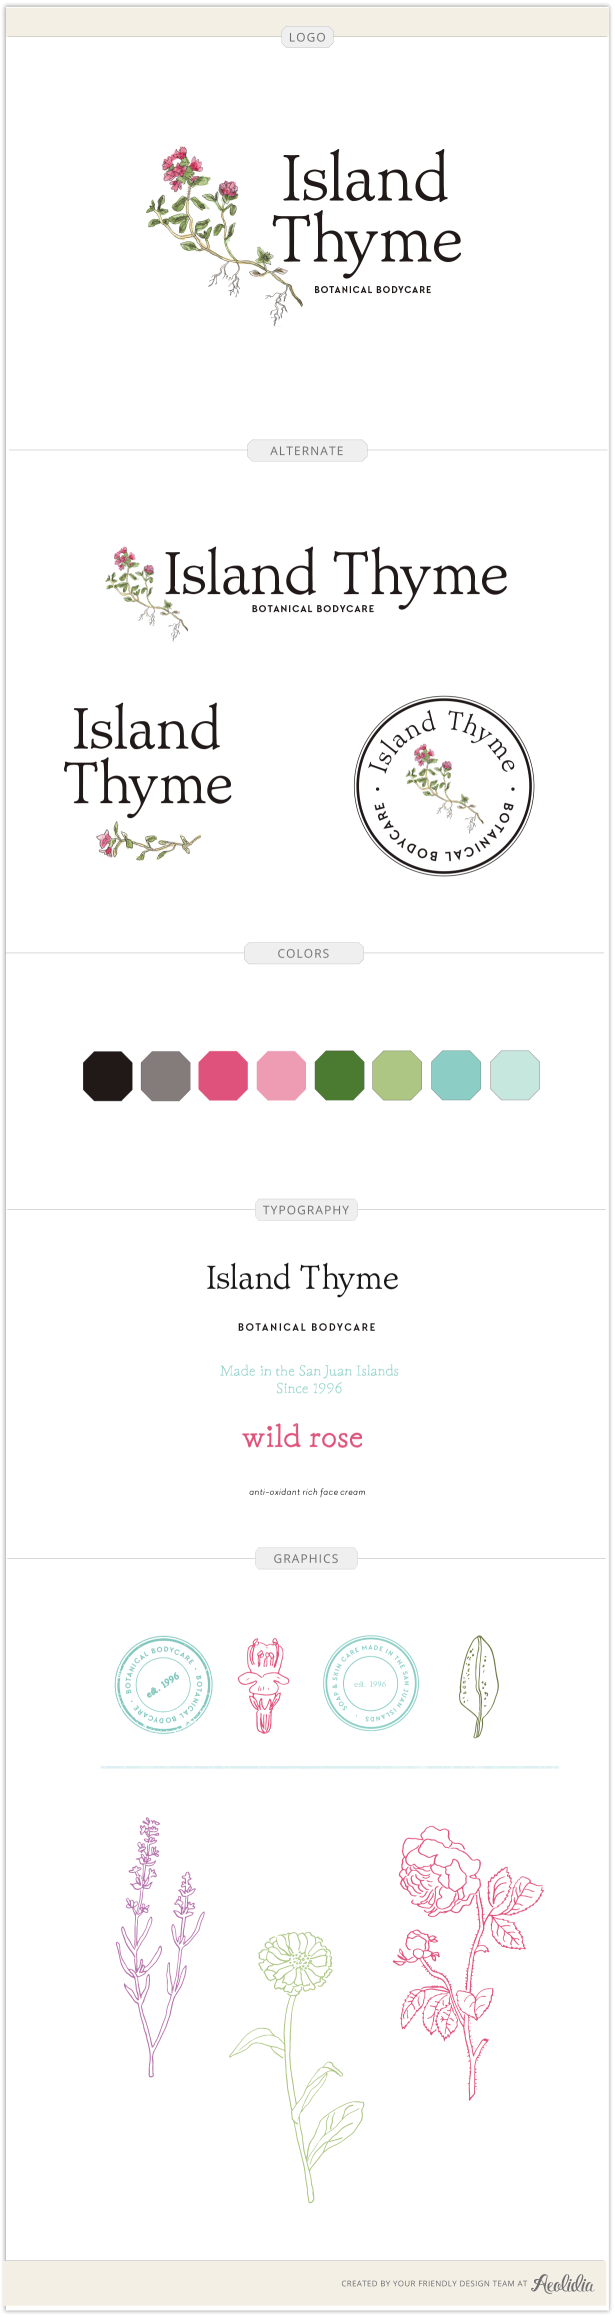 Island Thyme brand guide